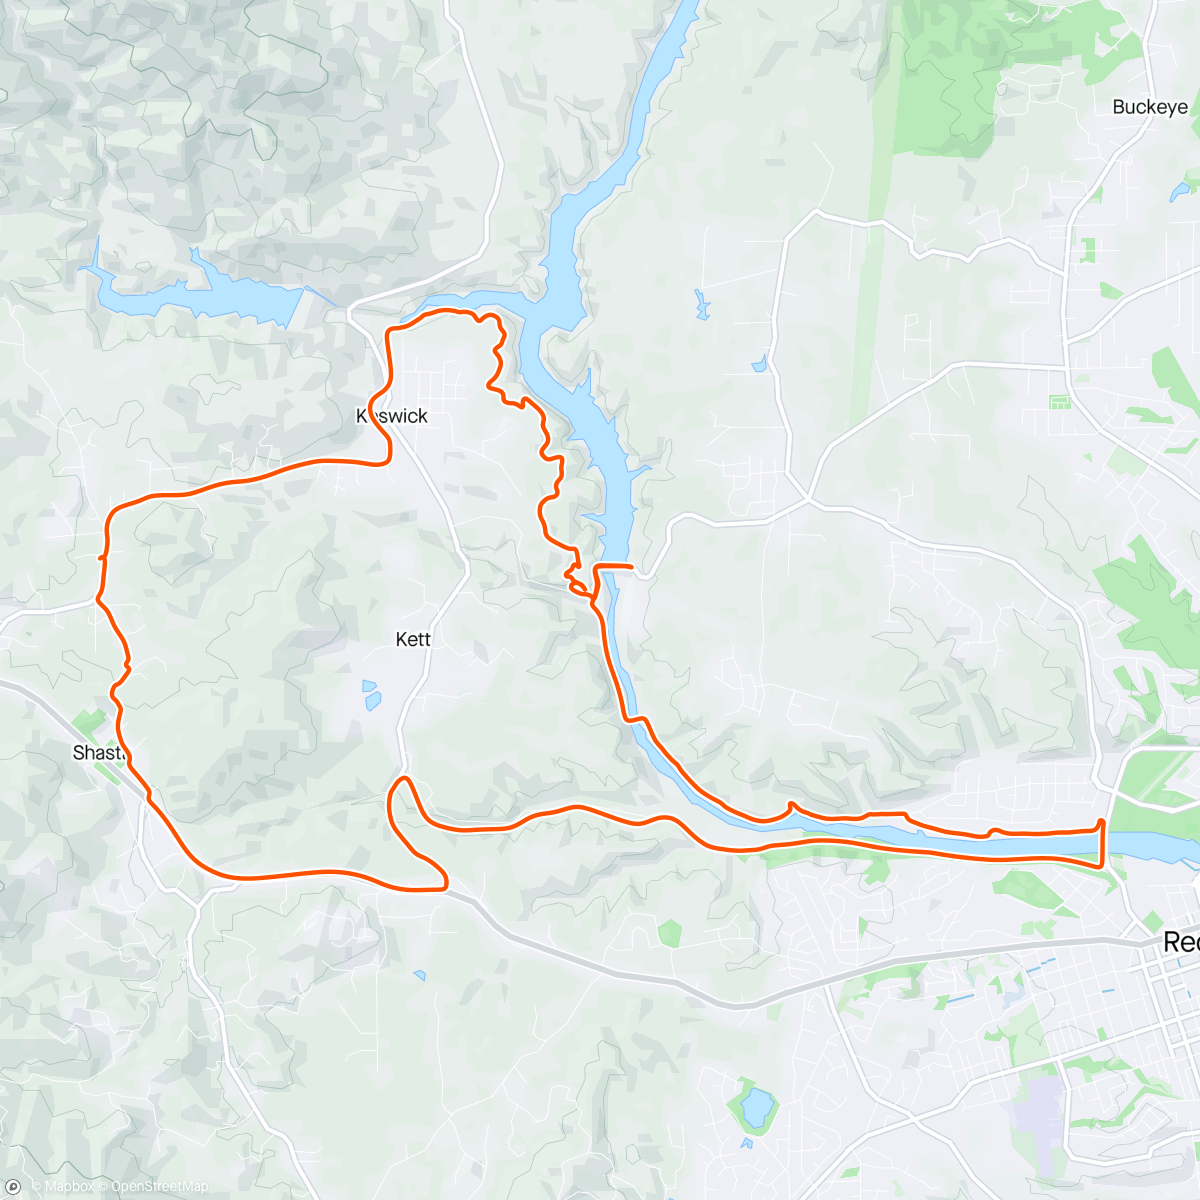 Map of the activity, Shasta, Keswick, Redding loop